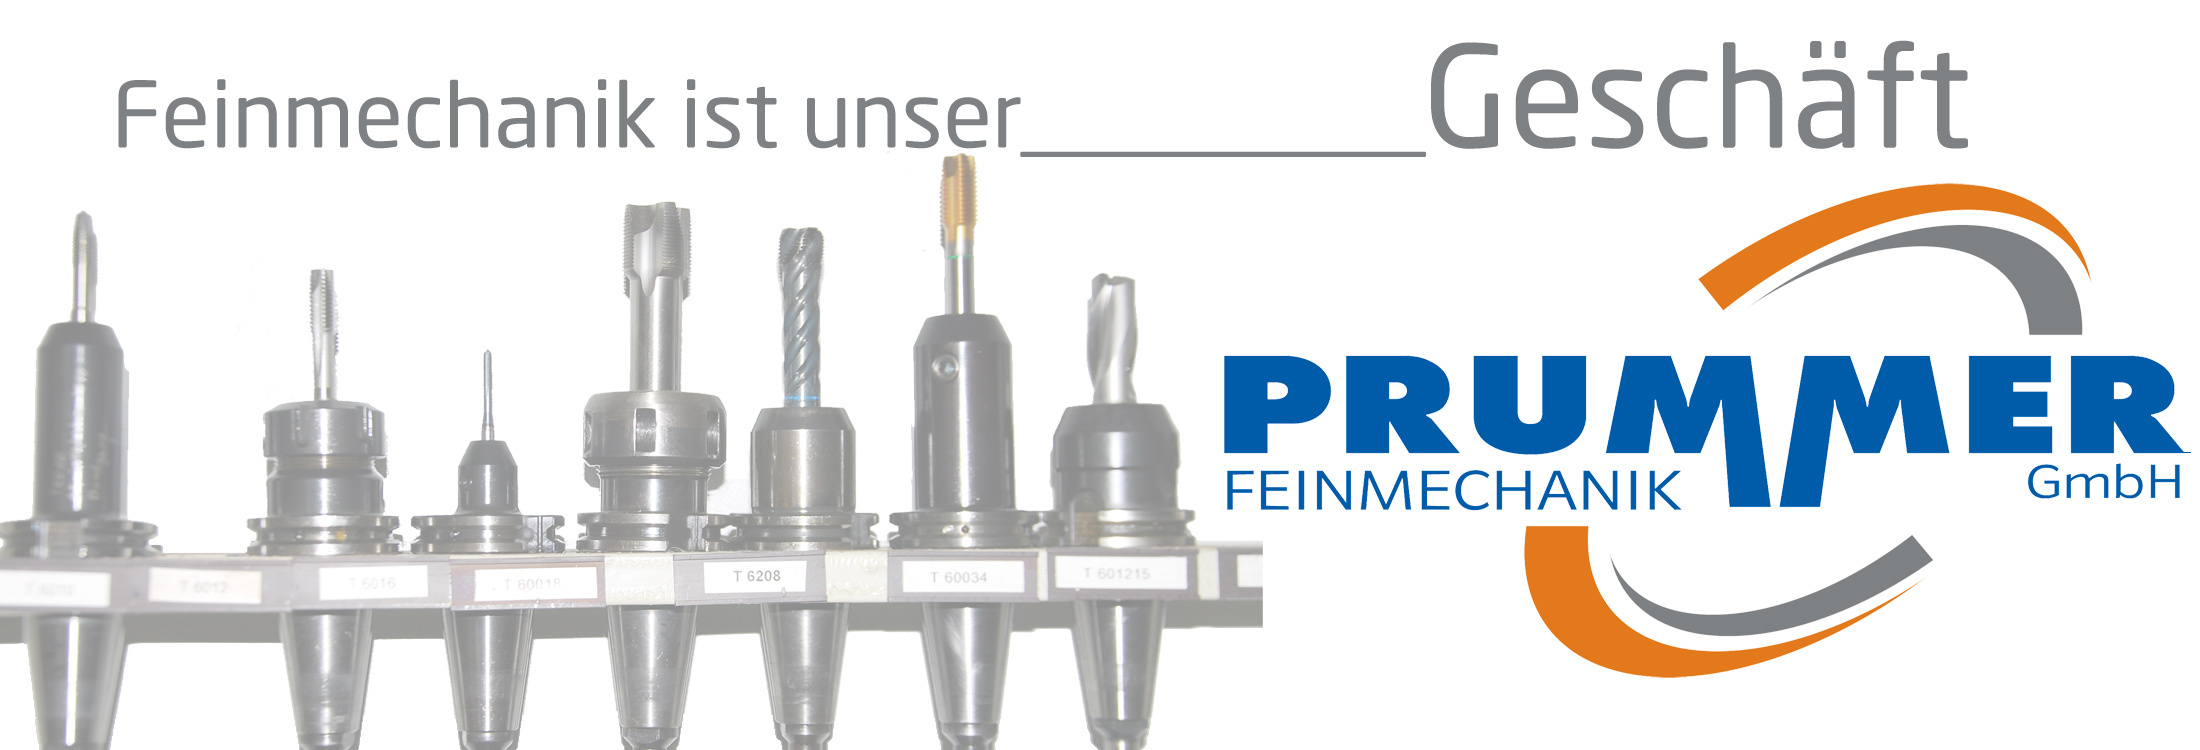 Prummer Feinmechanik GmbH